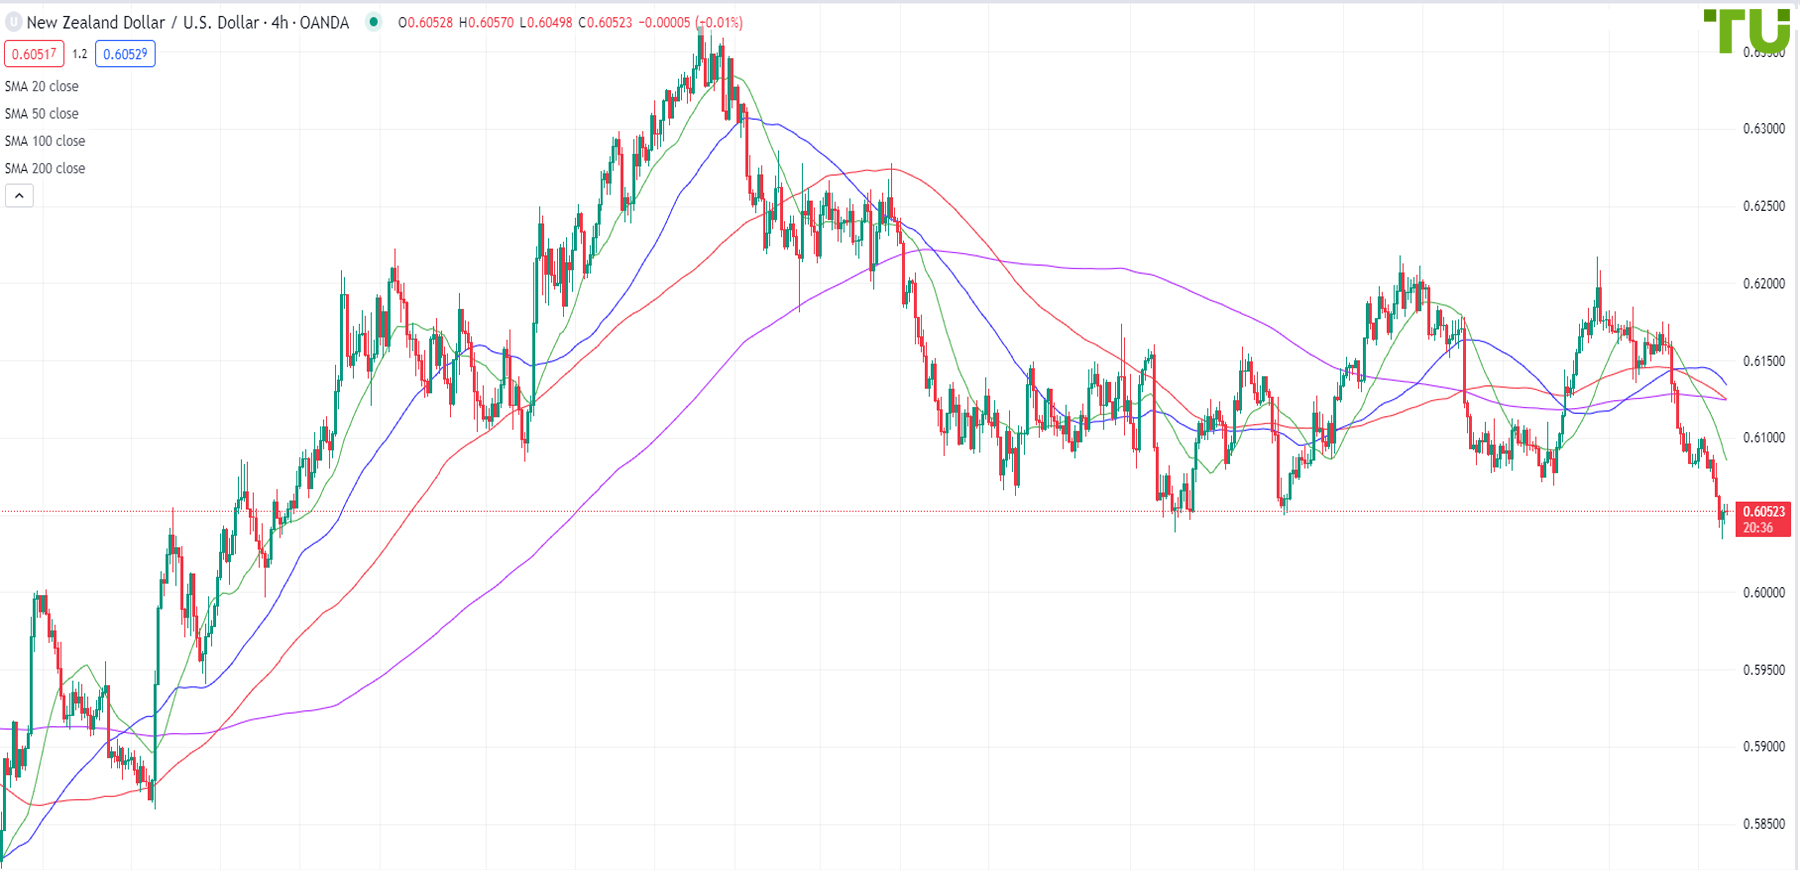 Kiwi/dollar continued to decline